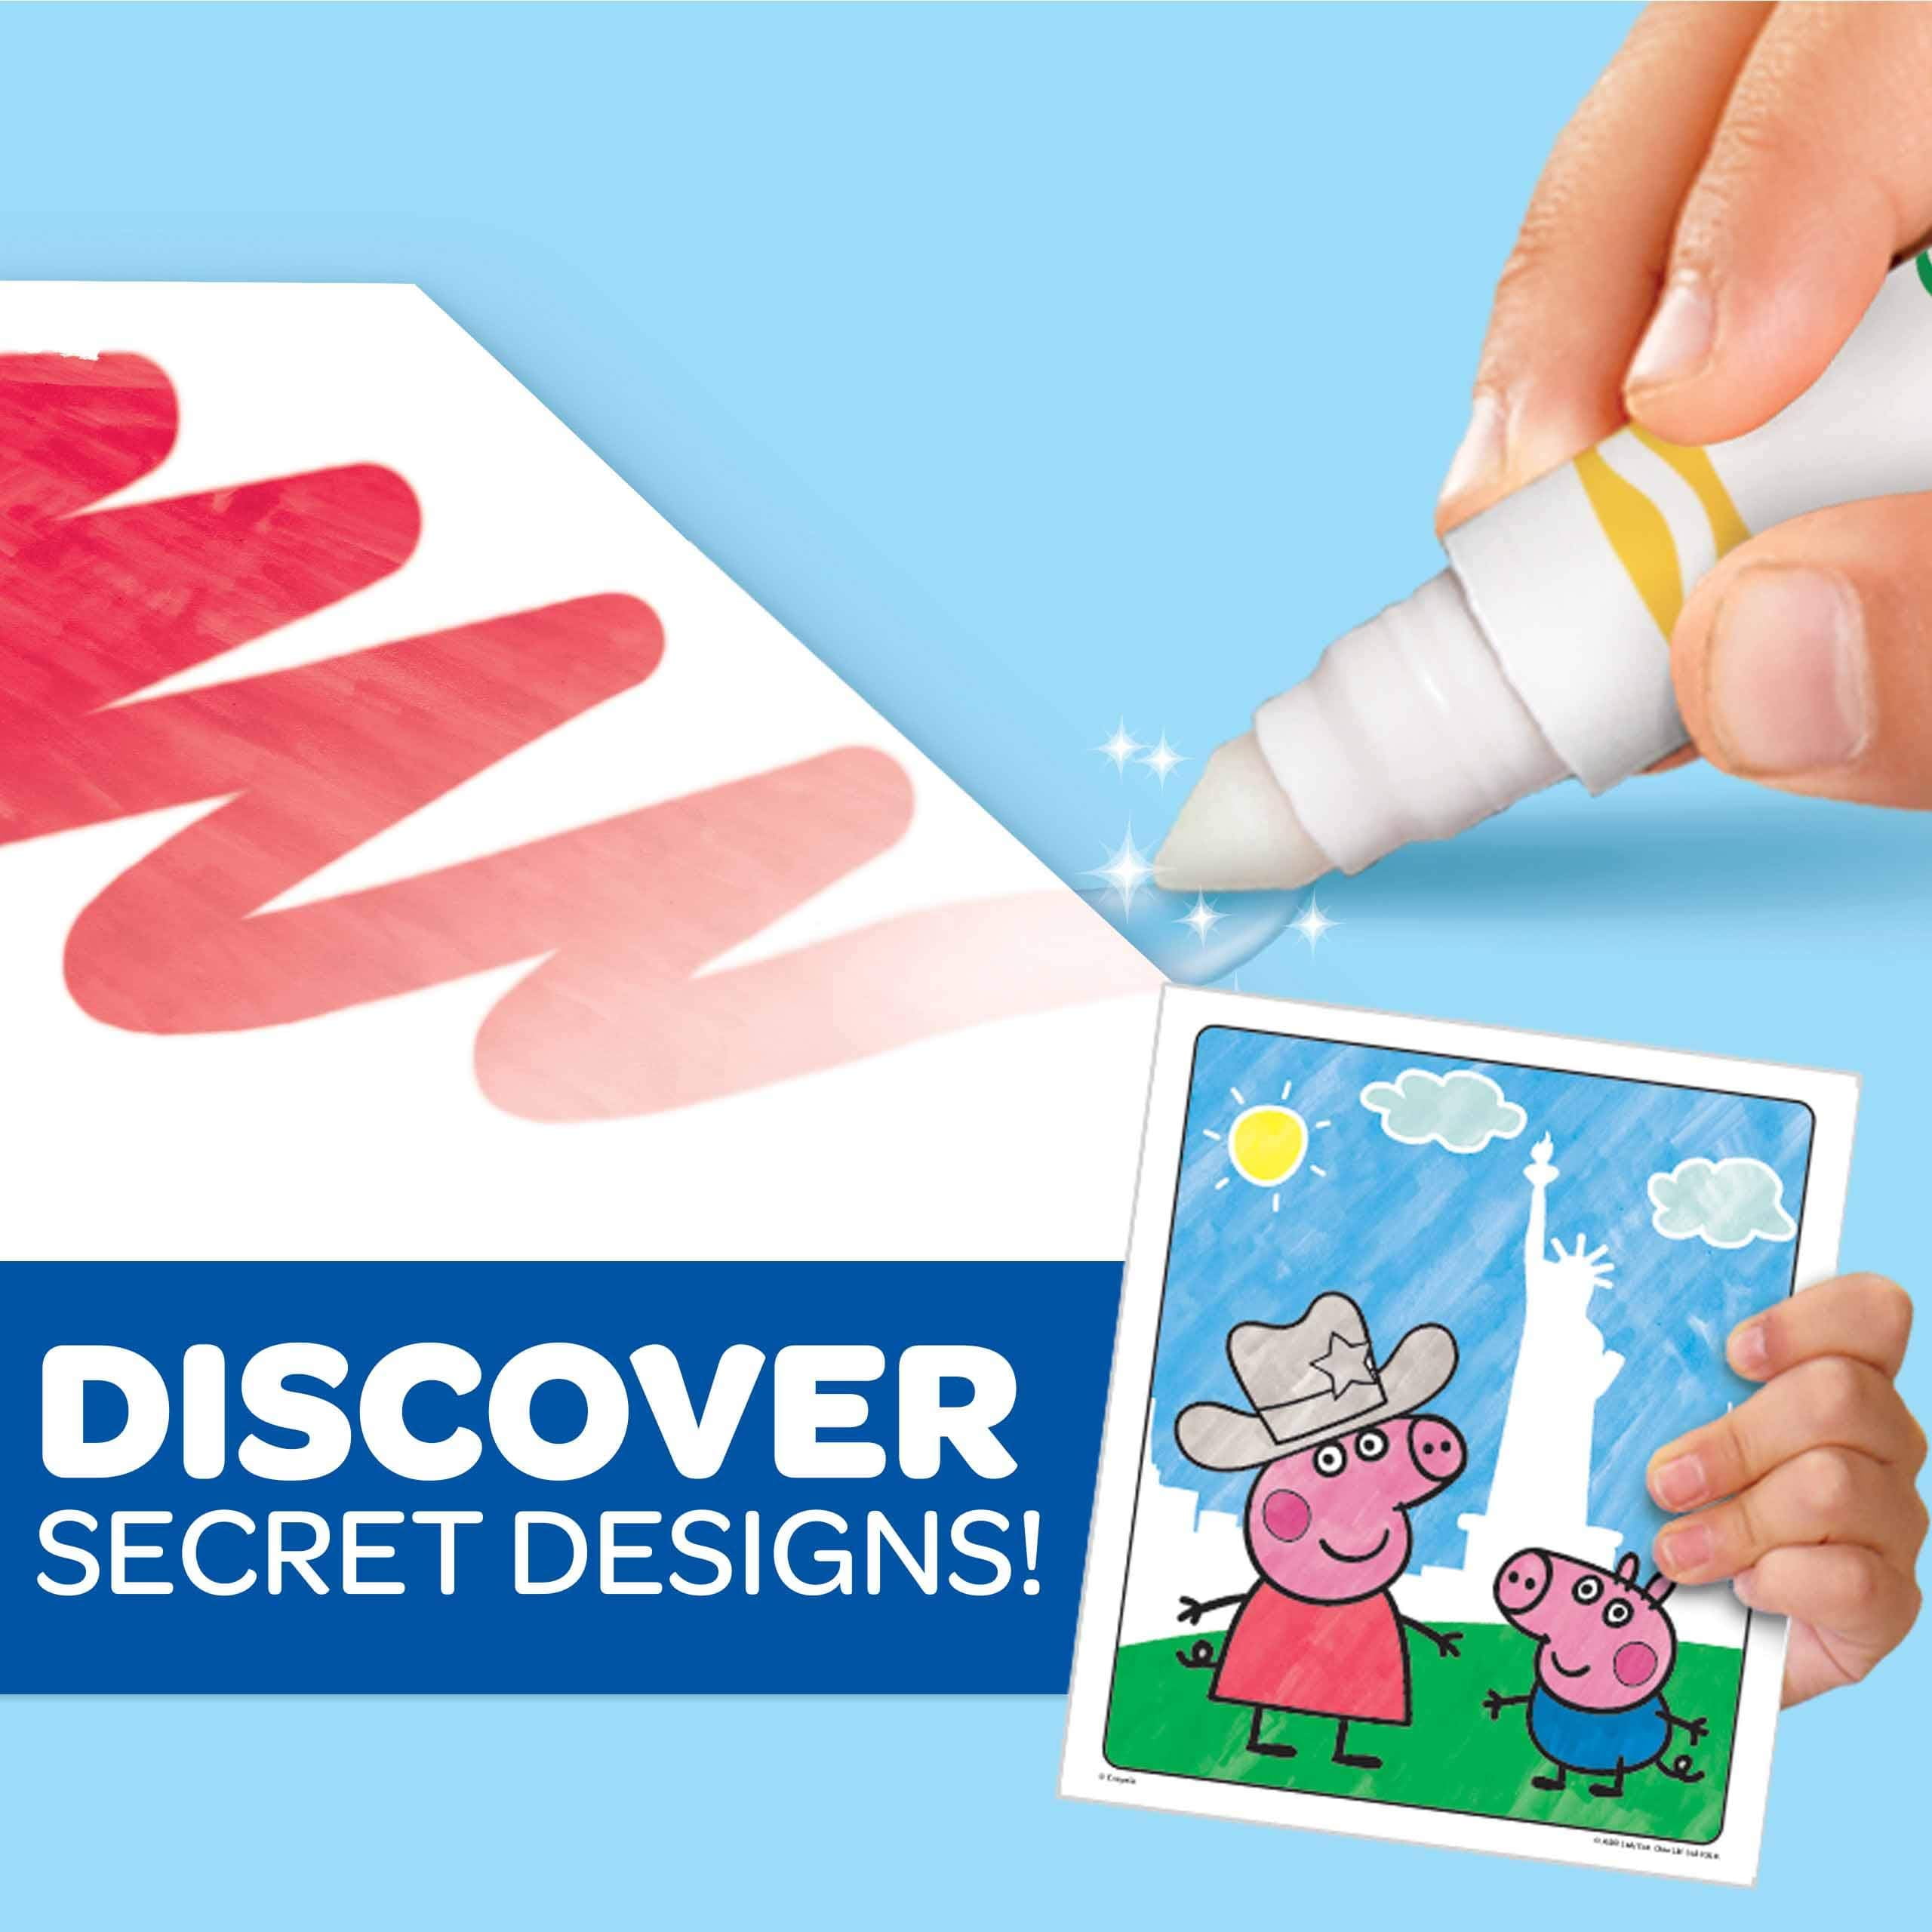 Inspiration Art Case Crayola Coloring Set for Kids, Crayola Kids Art Kit  140pcs 756832853559